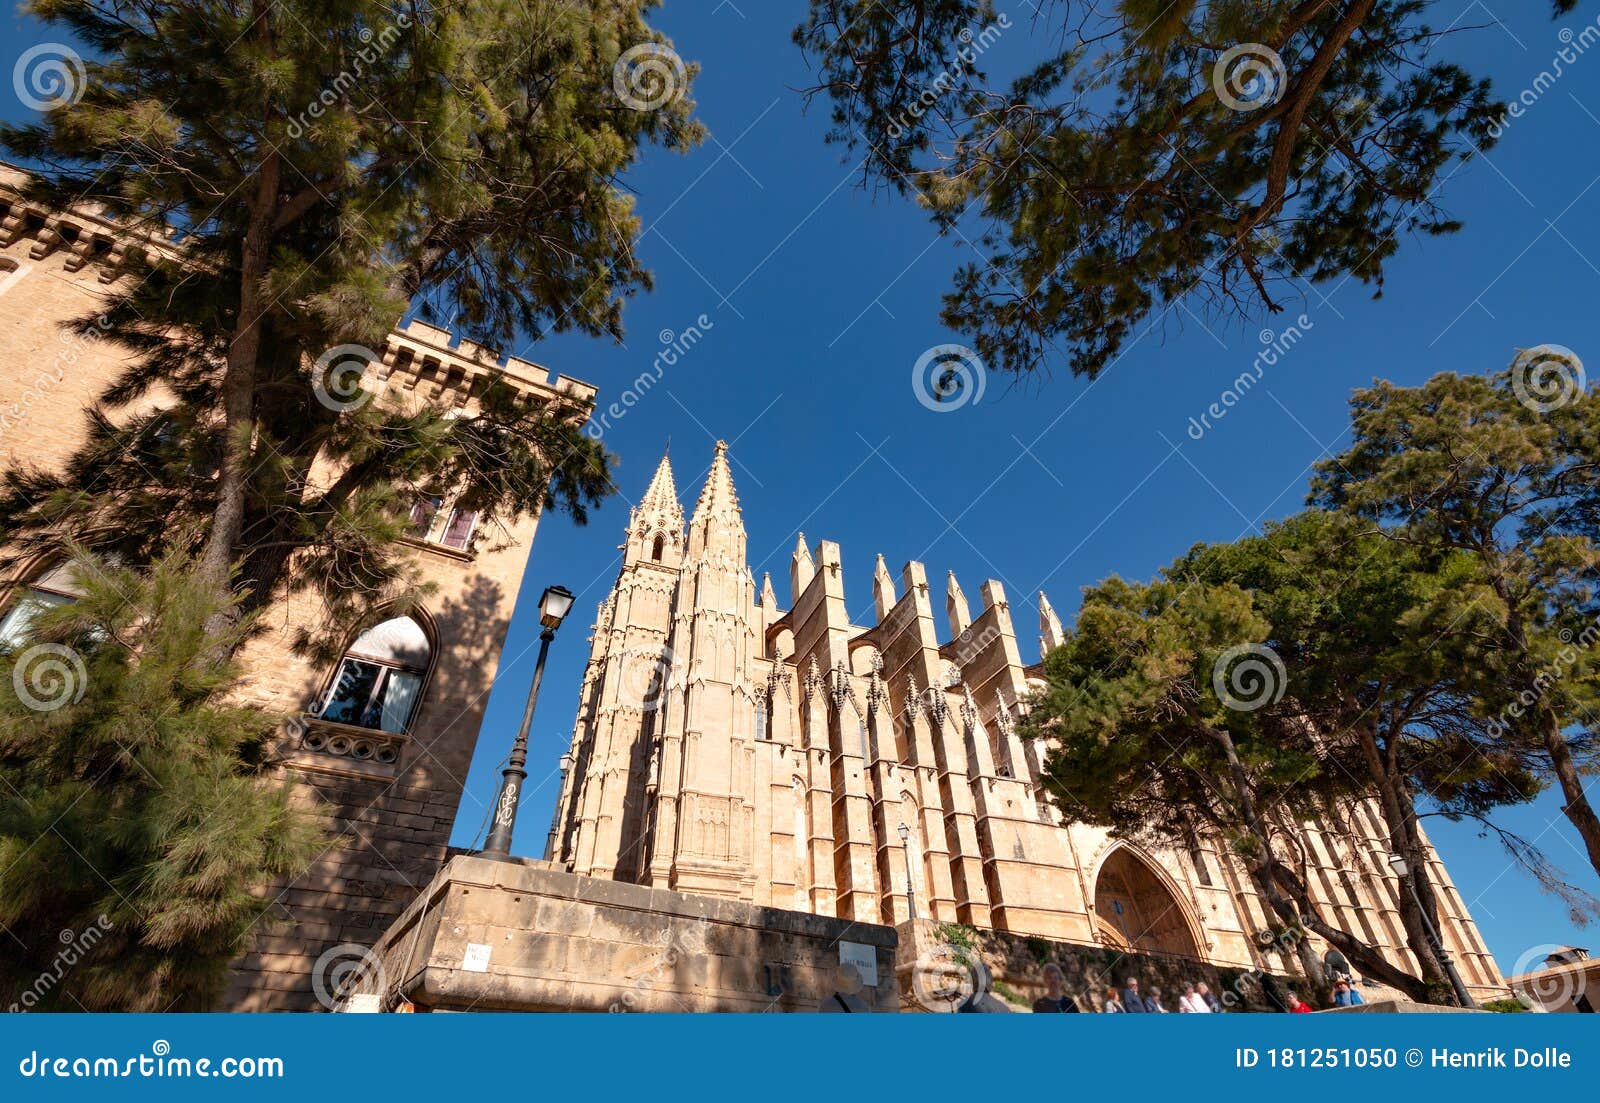 kathedrale von palma de mallorca, spanien